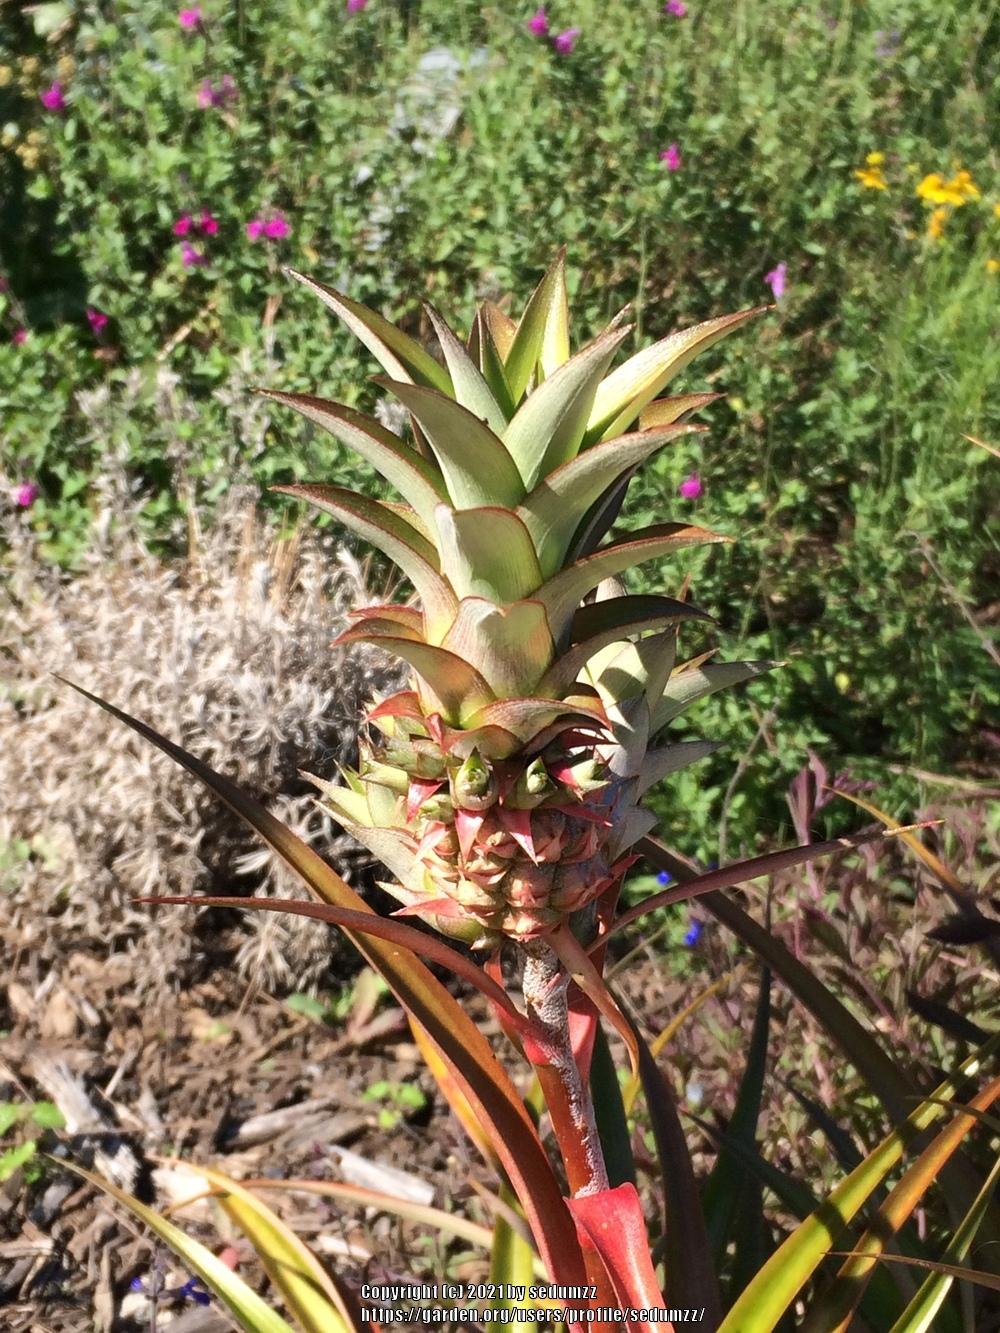 Photo of Pineapple (Ananas comosus) uploaded by sedumzz